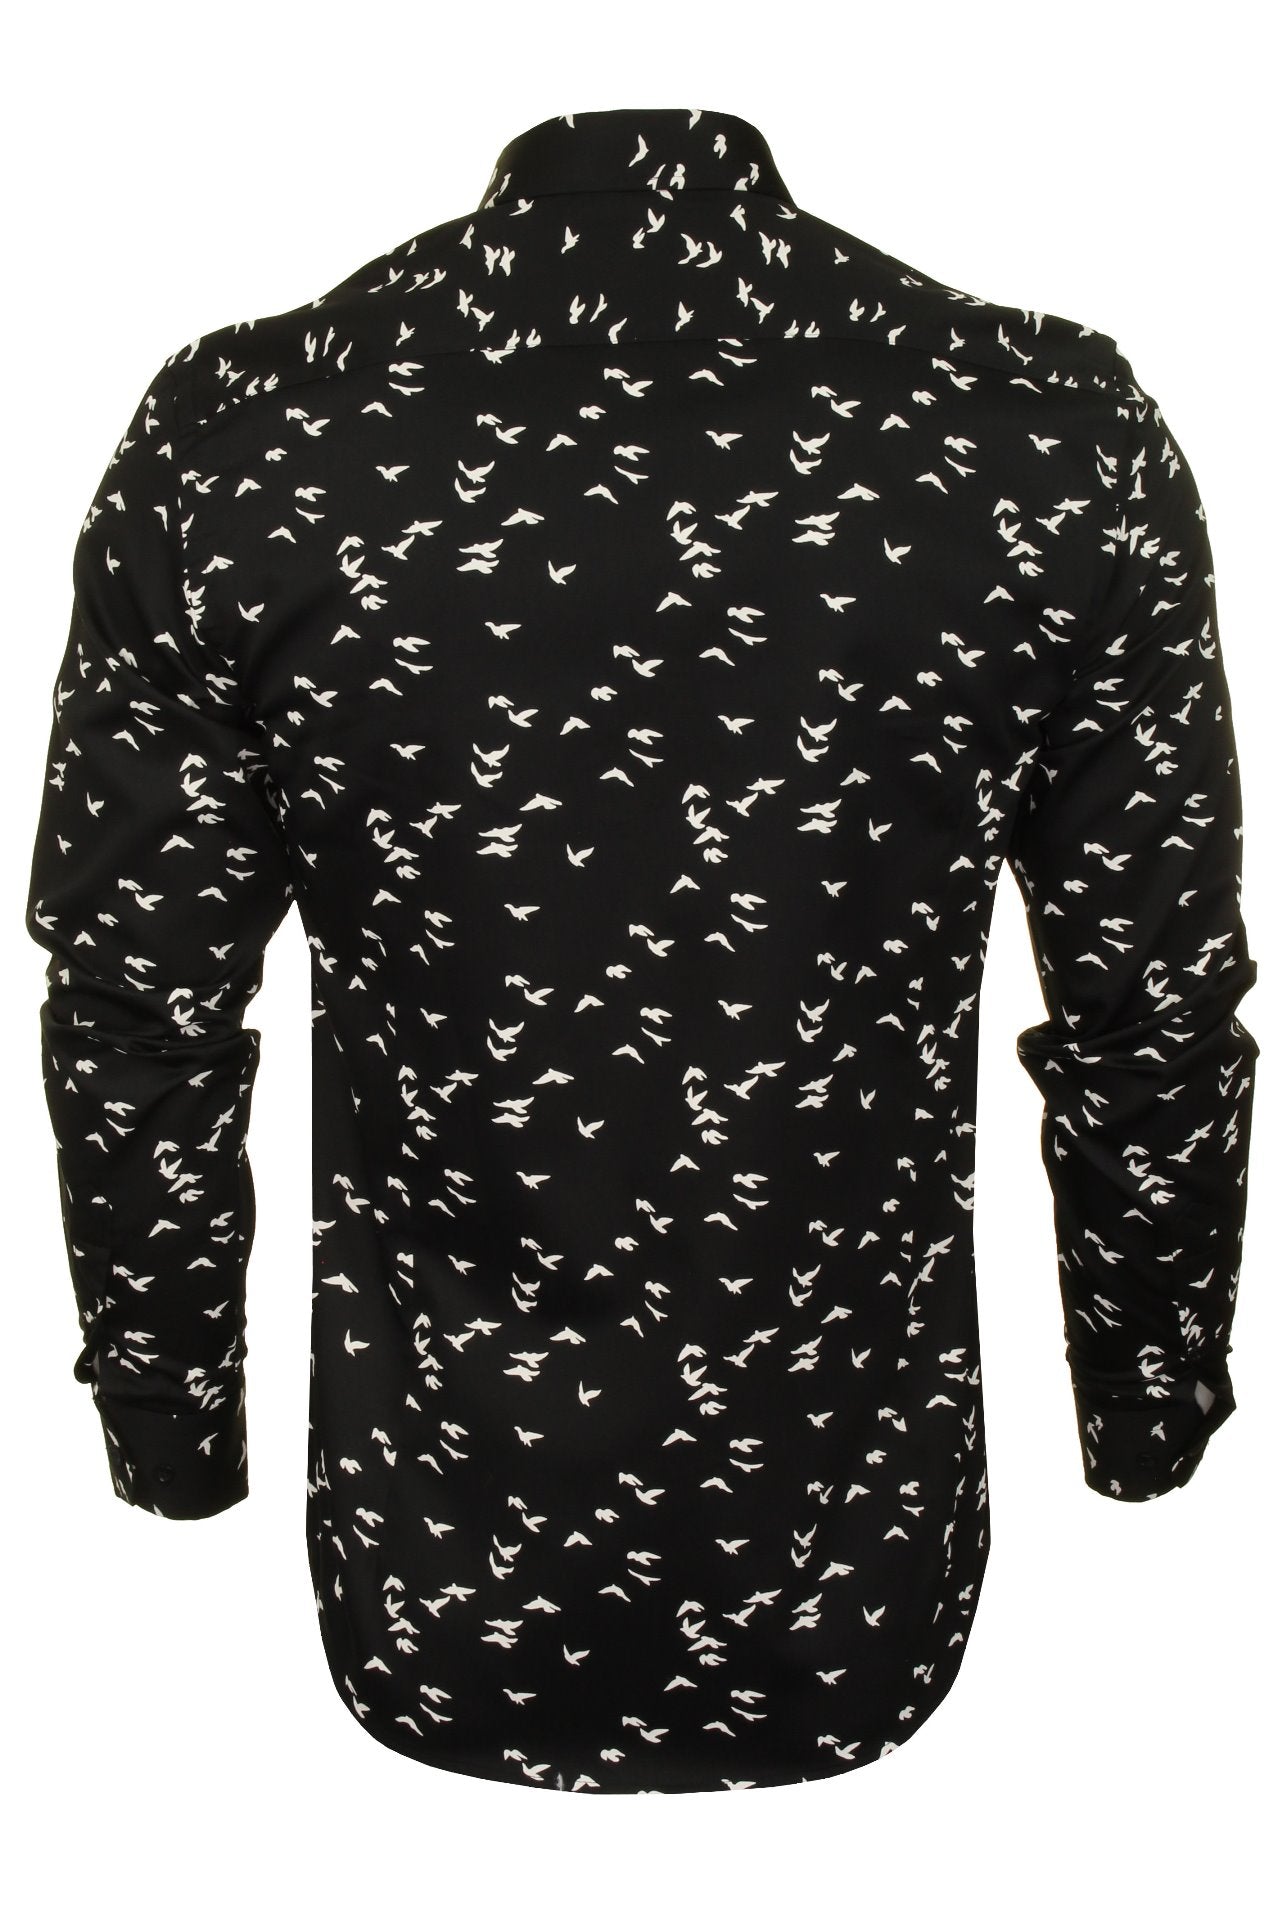 Xact Men's Cotton Bird Print Long Sleeved Shirt-3